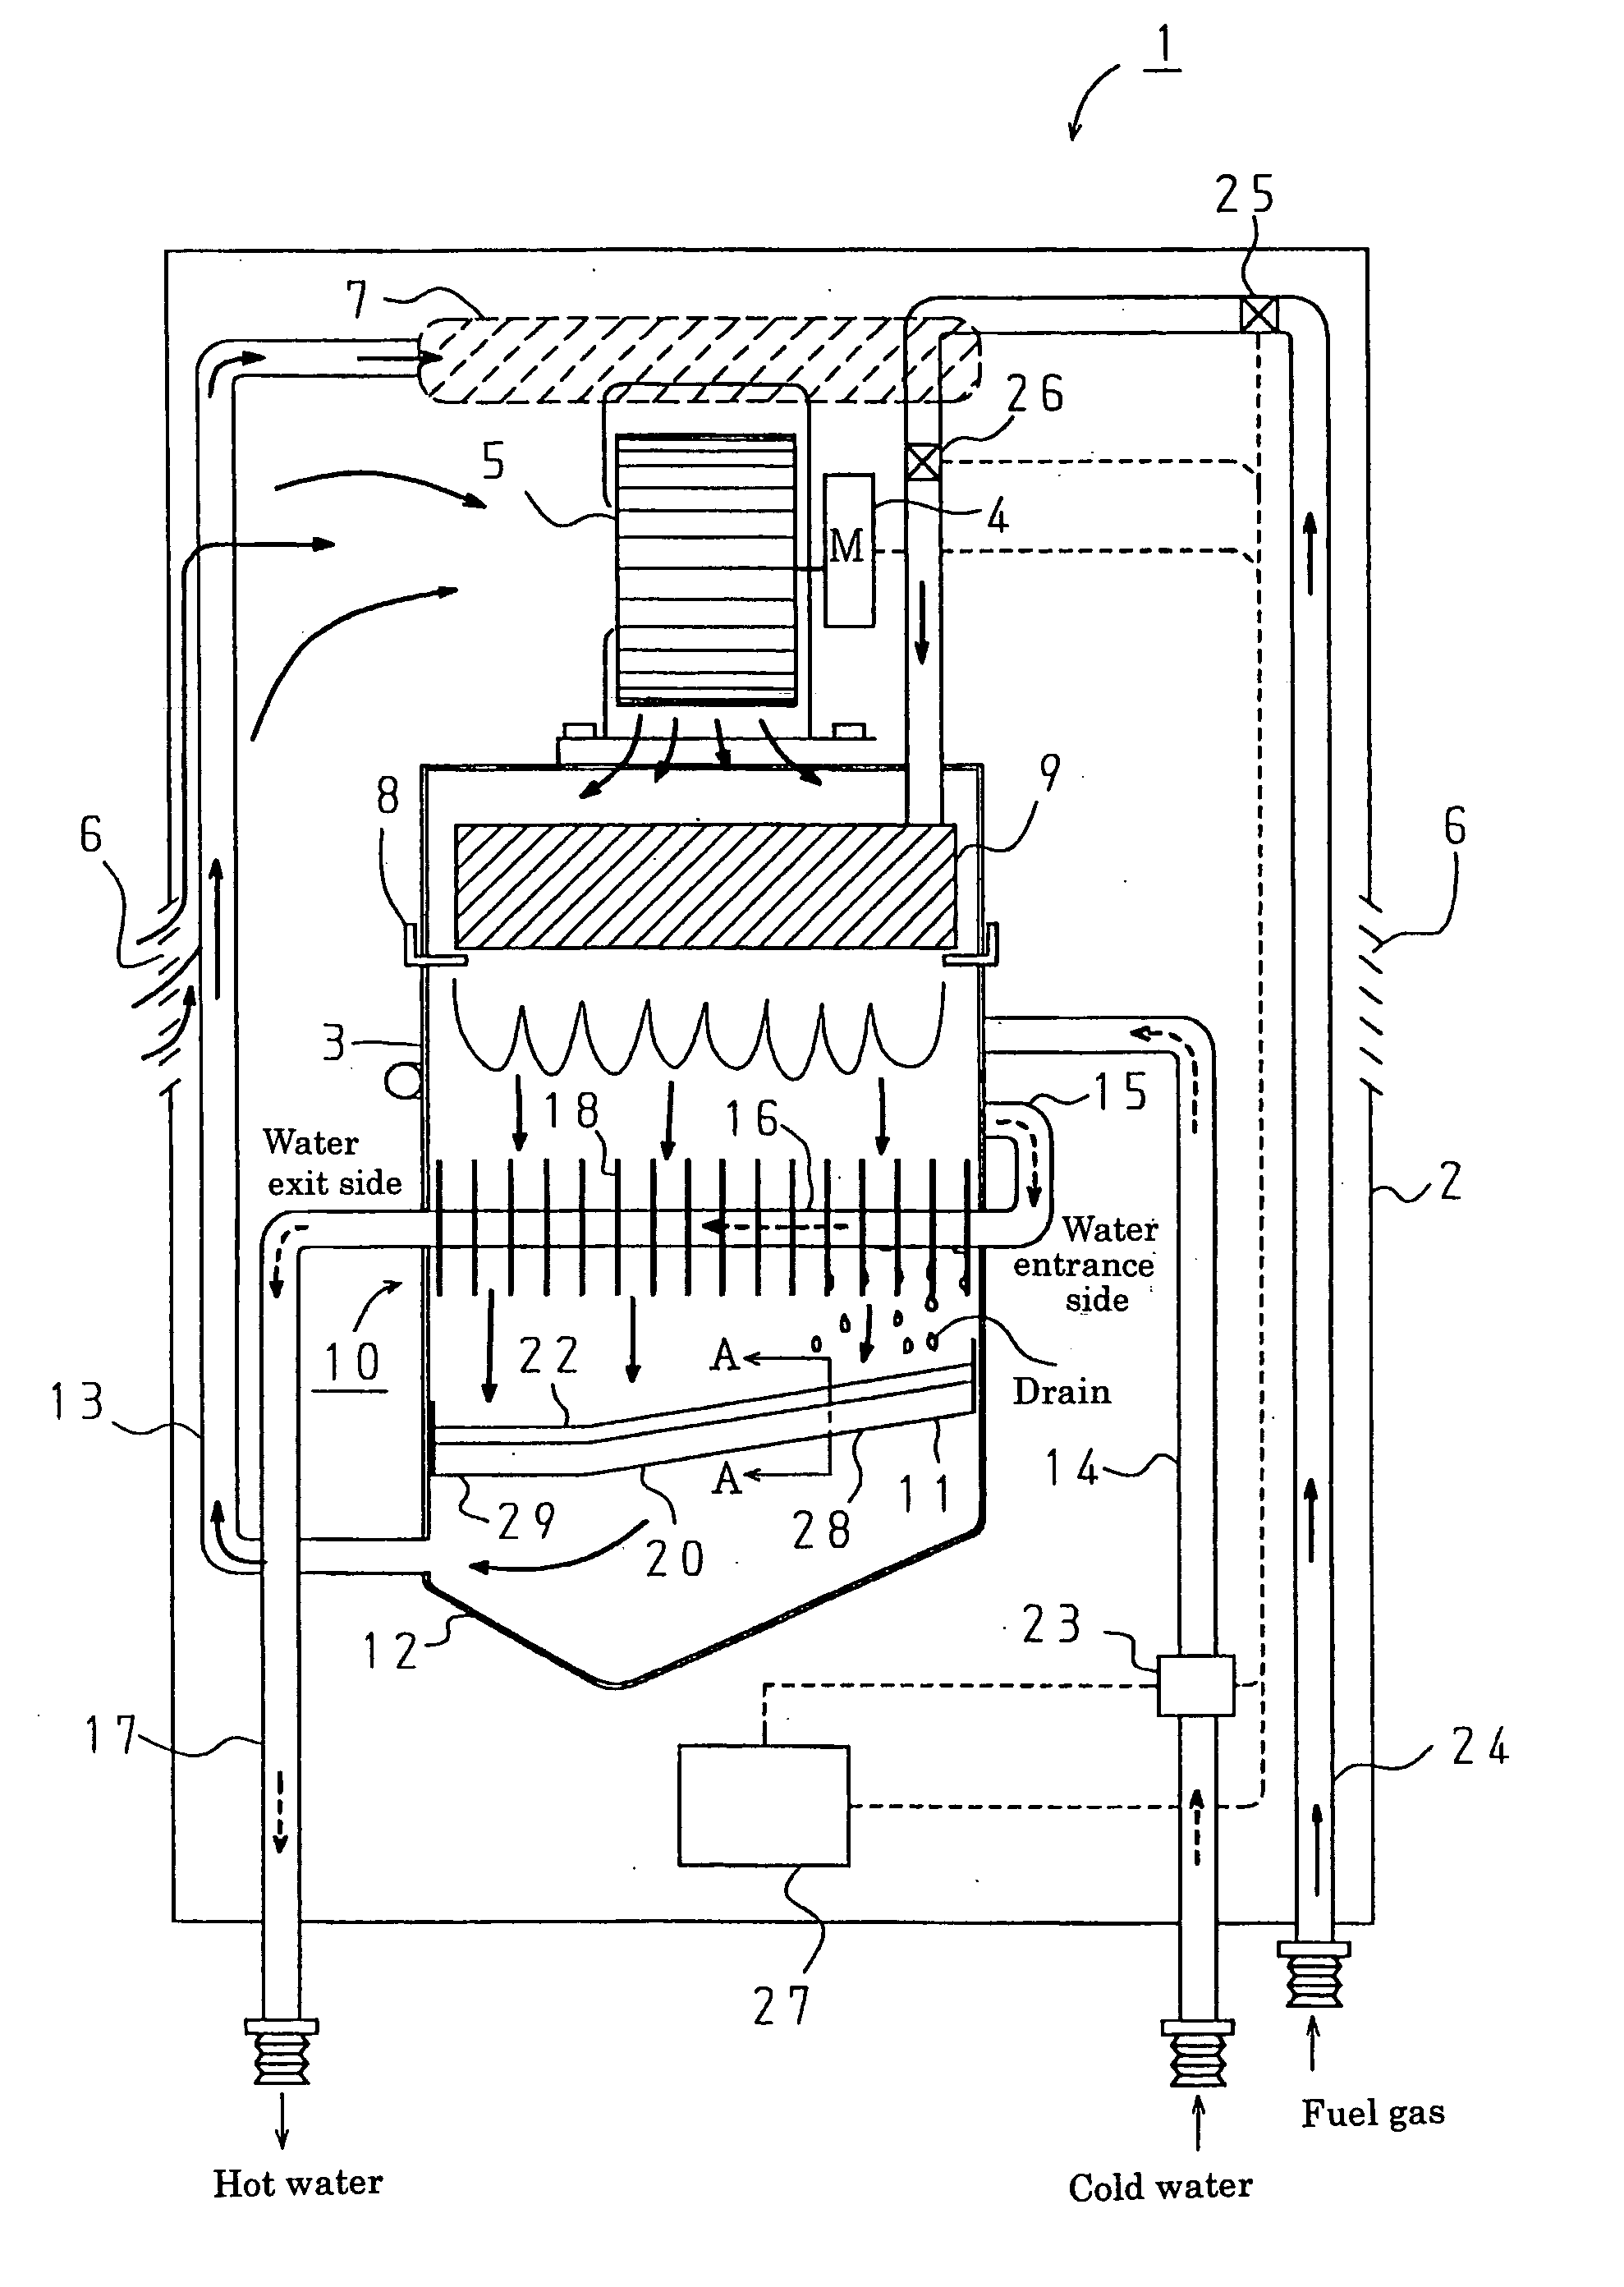 Hot water apparatus